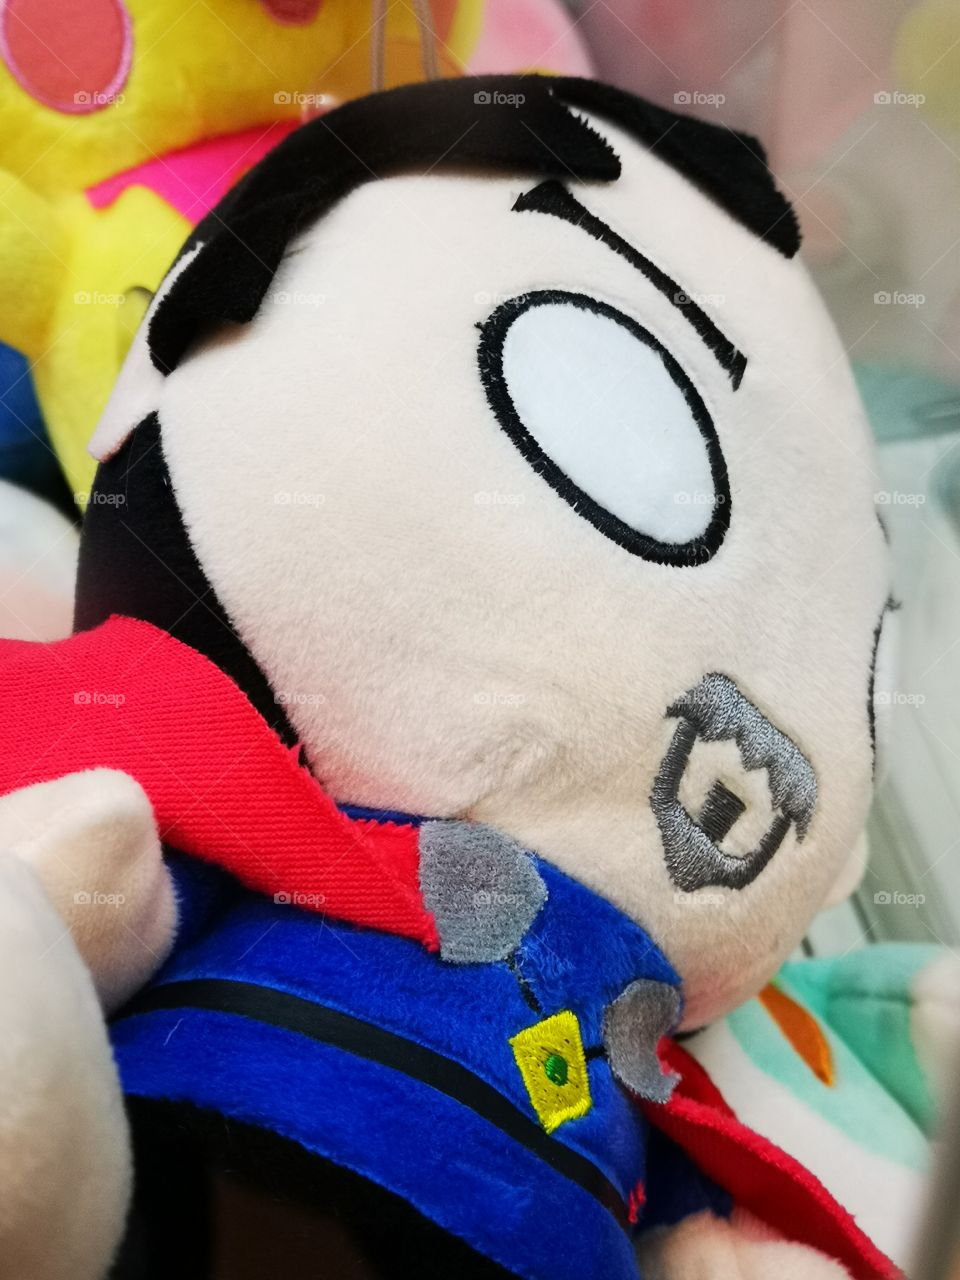 Doctor Strange plushie toy close up